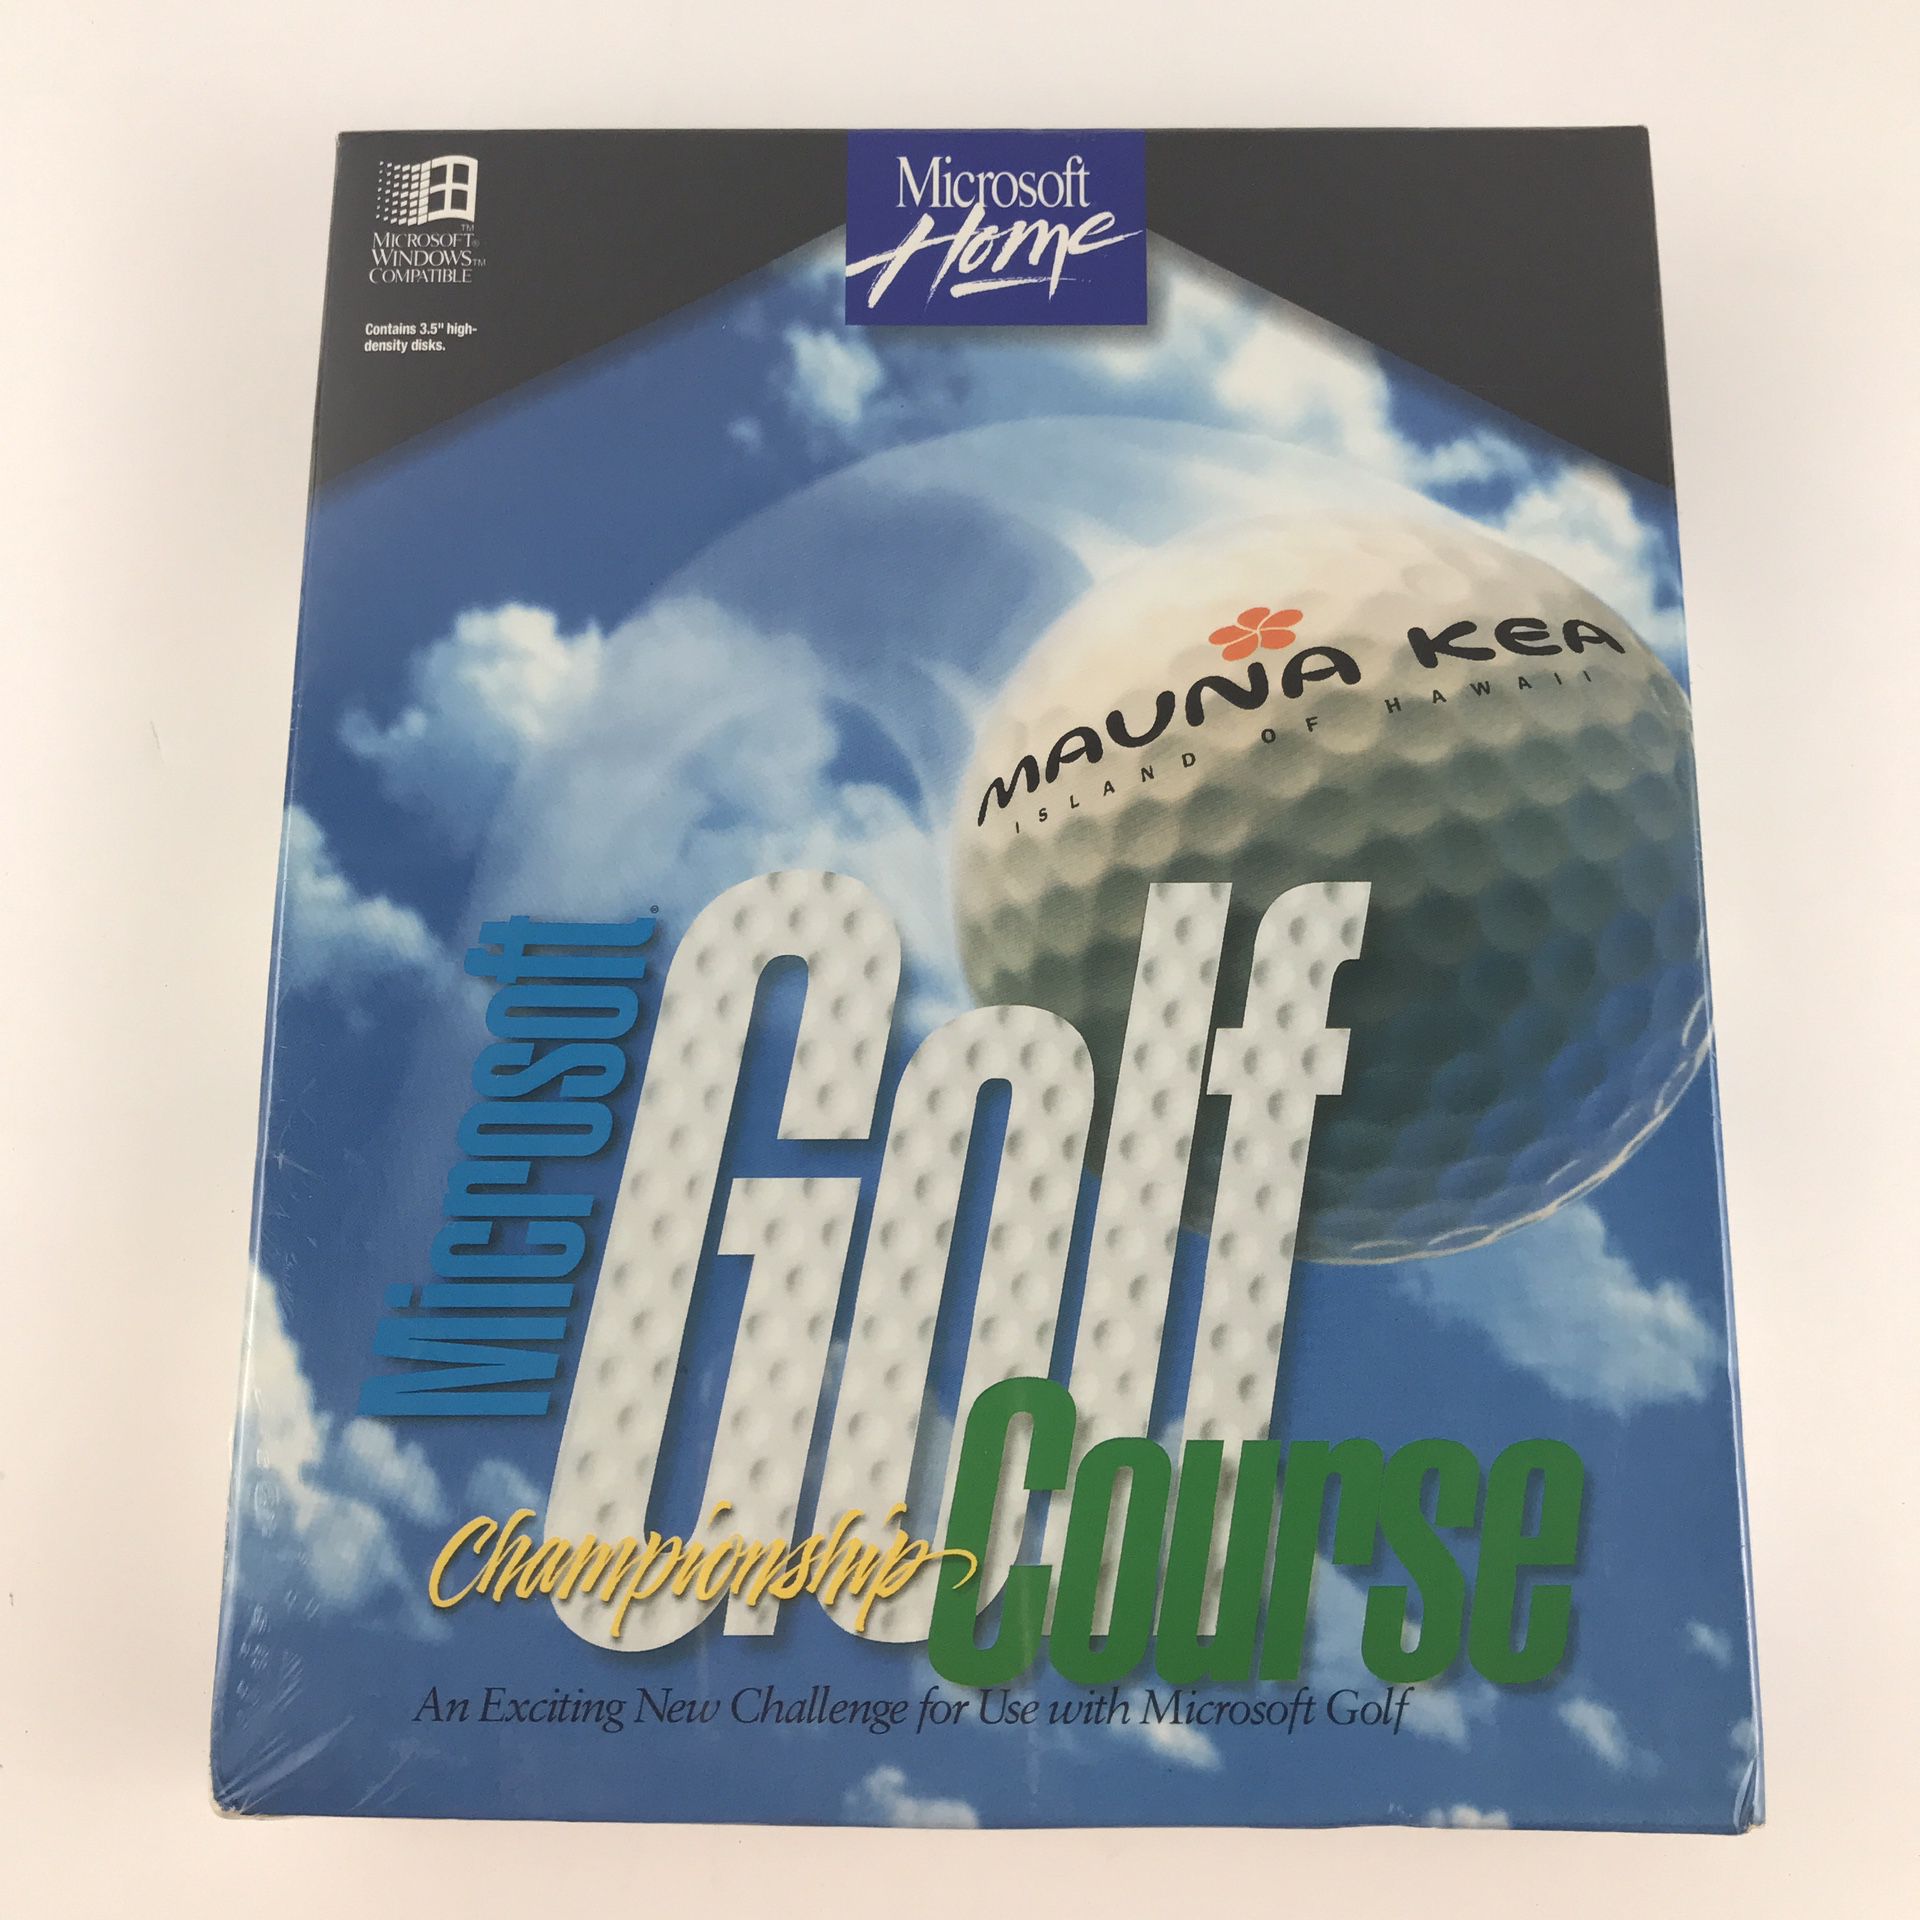 Microsoft Home Mauna Kea Microsoft Golf Championship Course Windows Compatible